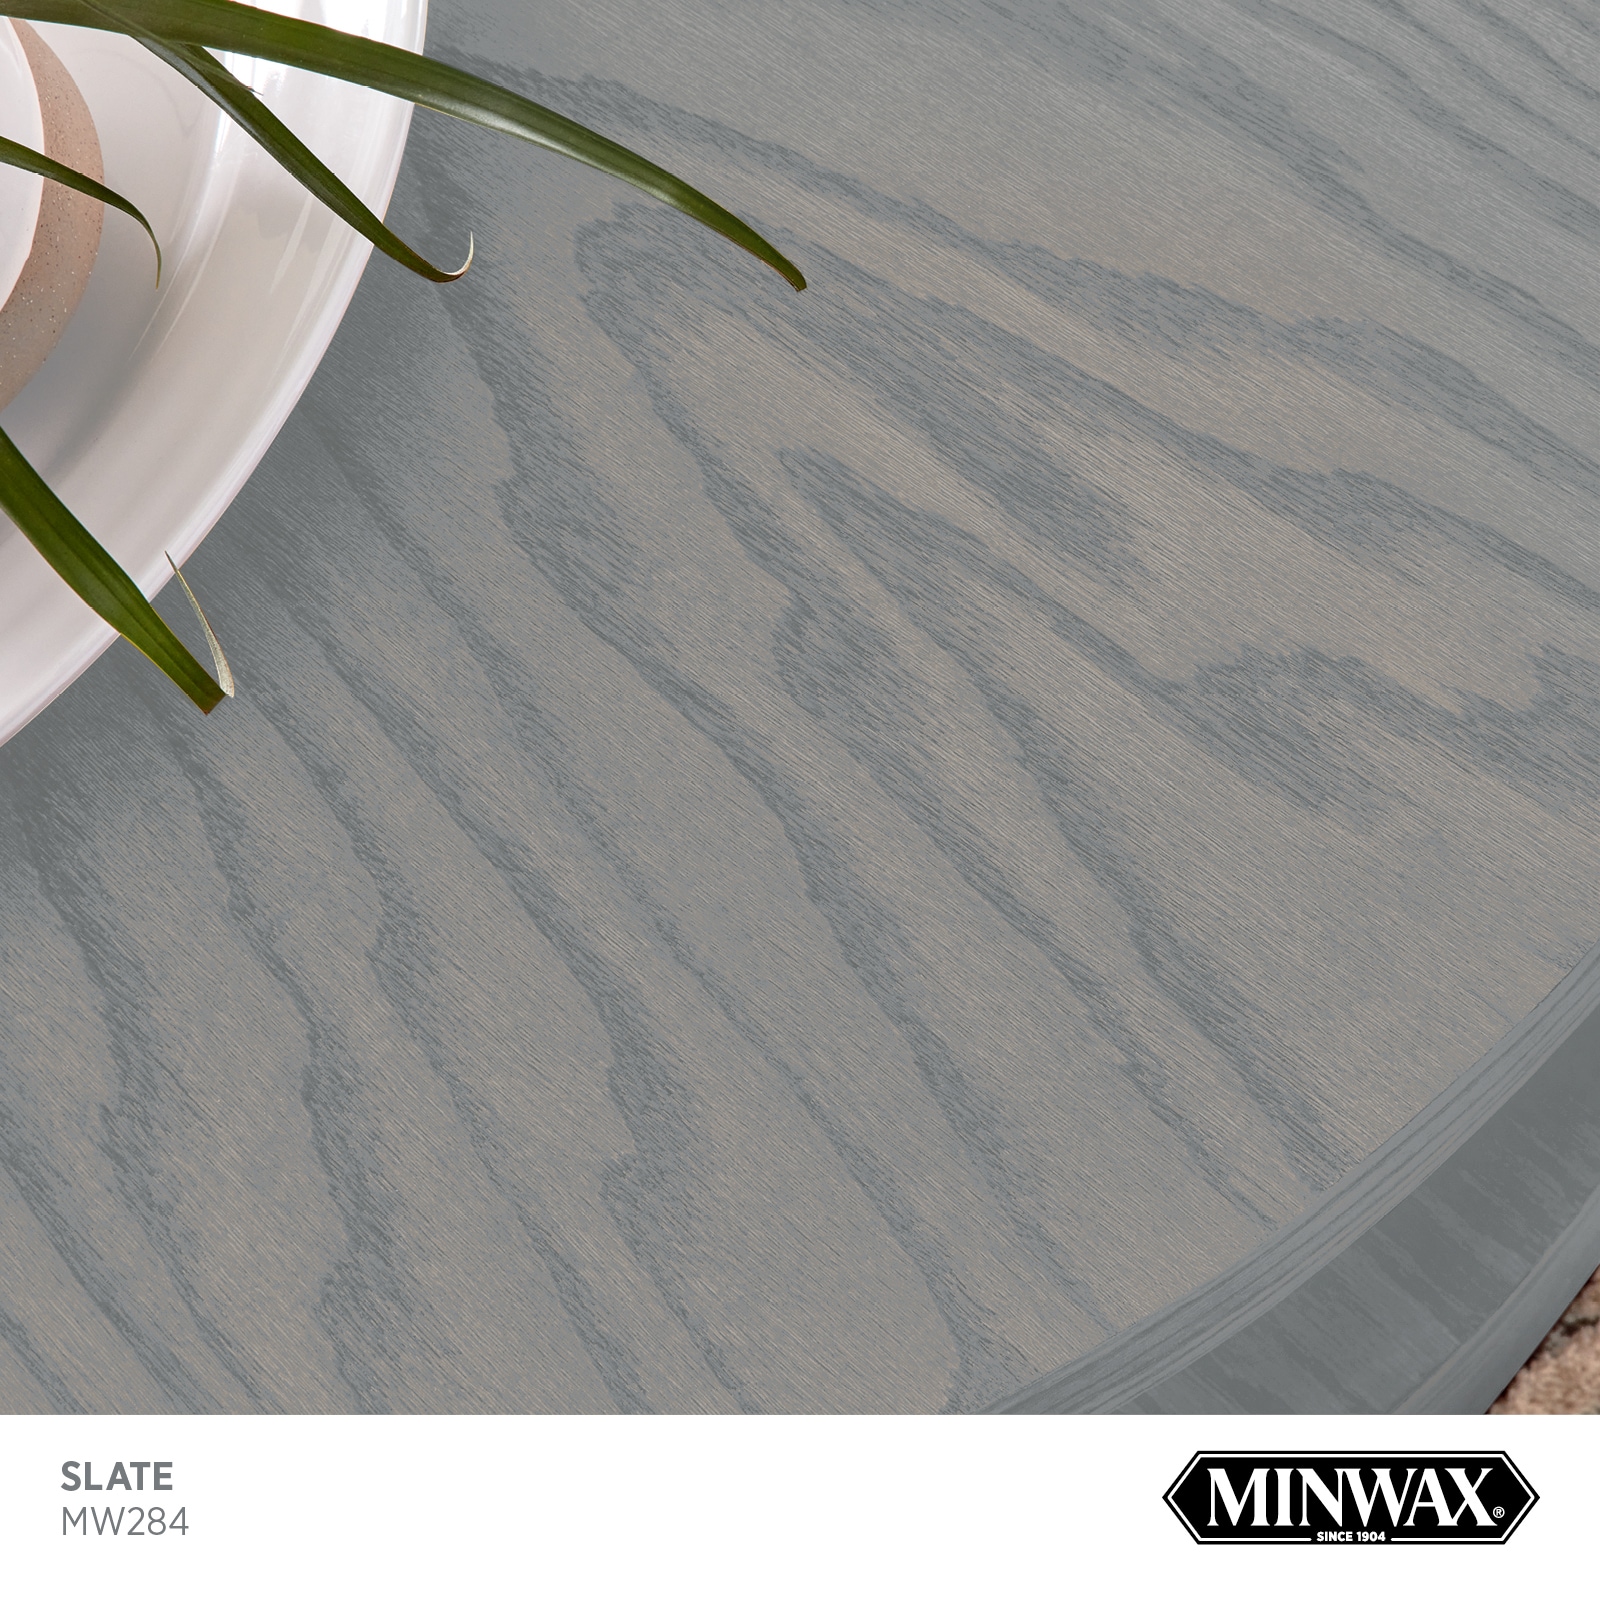 Minwax Gel Stain Oil-Based Slate Semi-Transparent Interior Stain